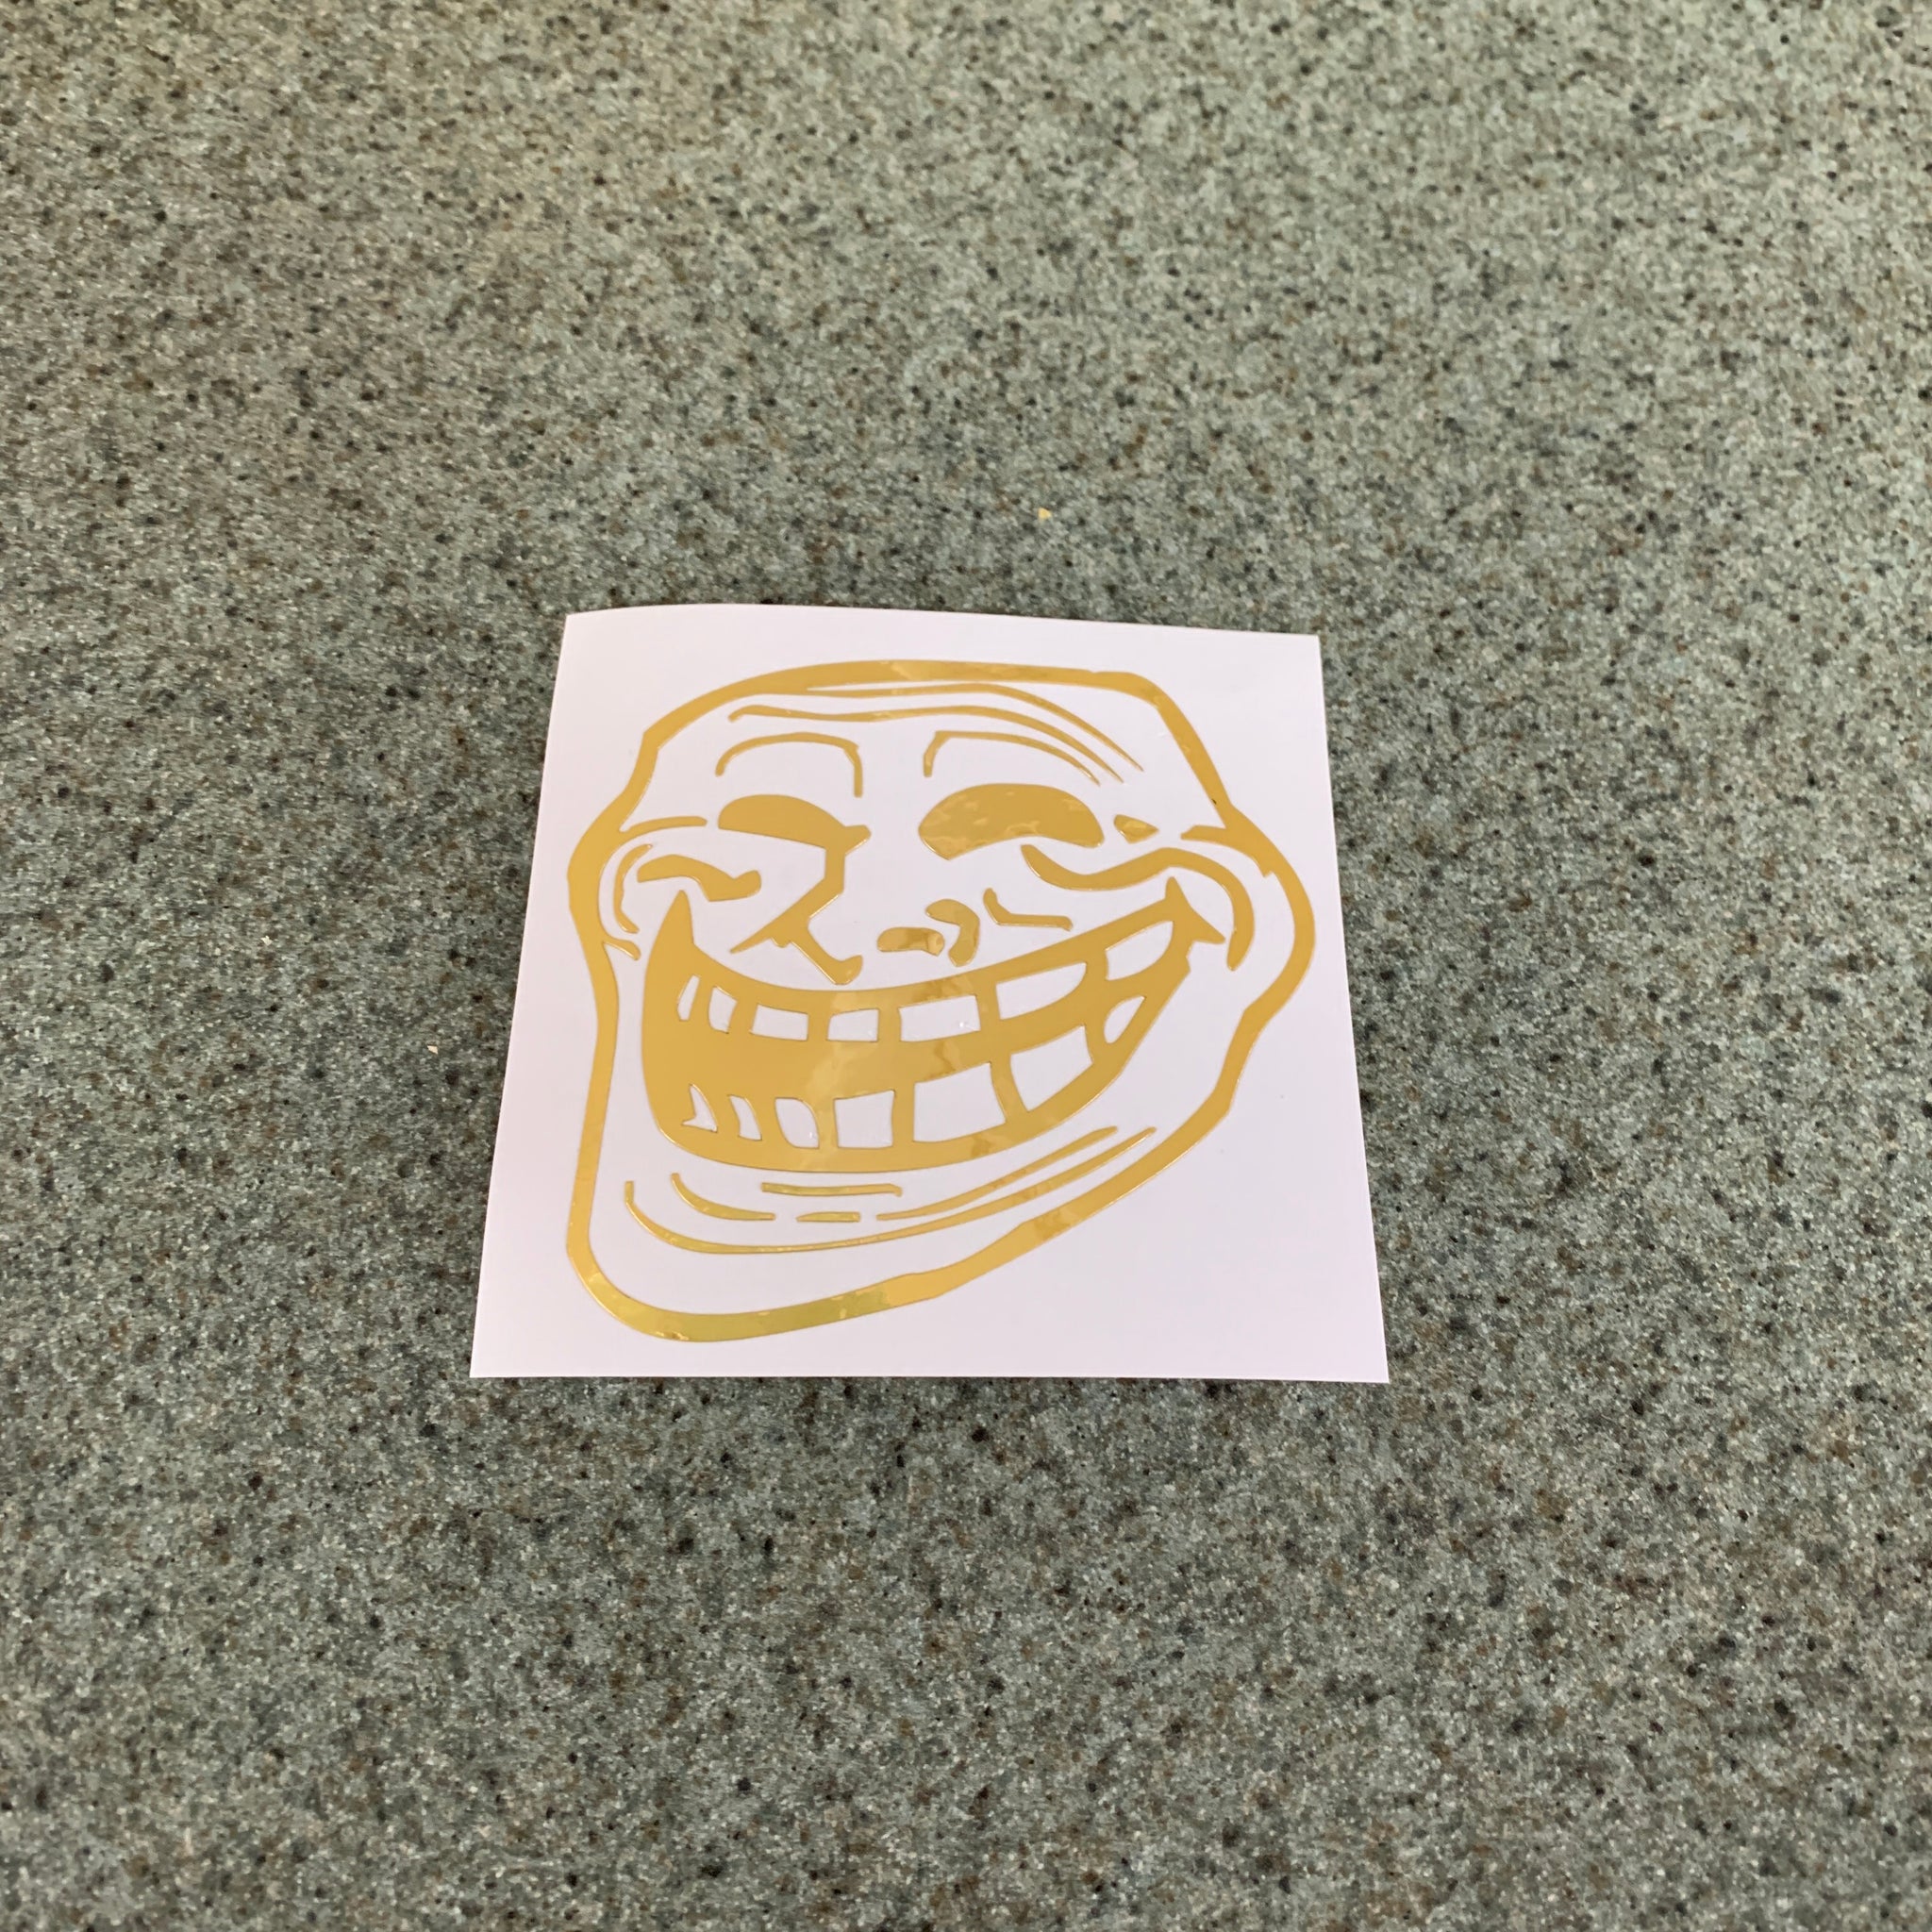  GRITKULTURE Troll Face Meme Funny Decal Vinyl Sticker for  Cars, Trucks, Windows, and Laptops Trollface